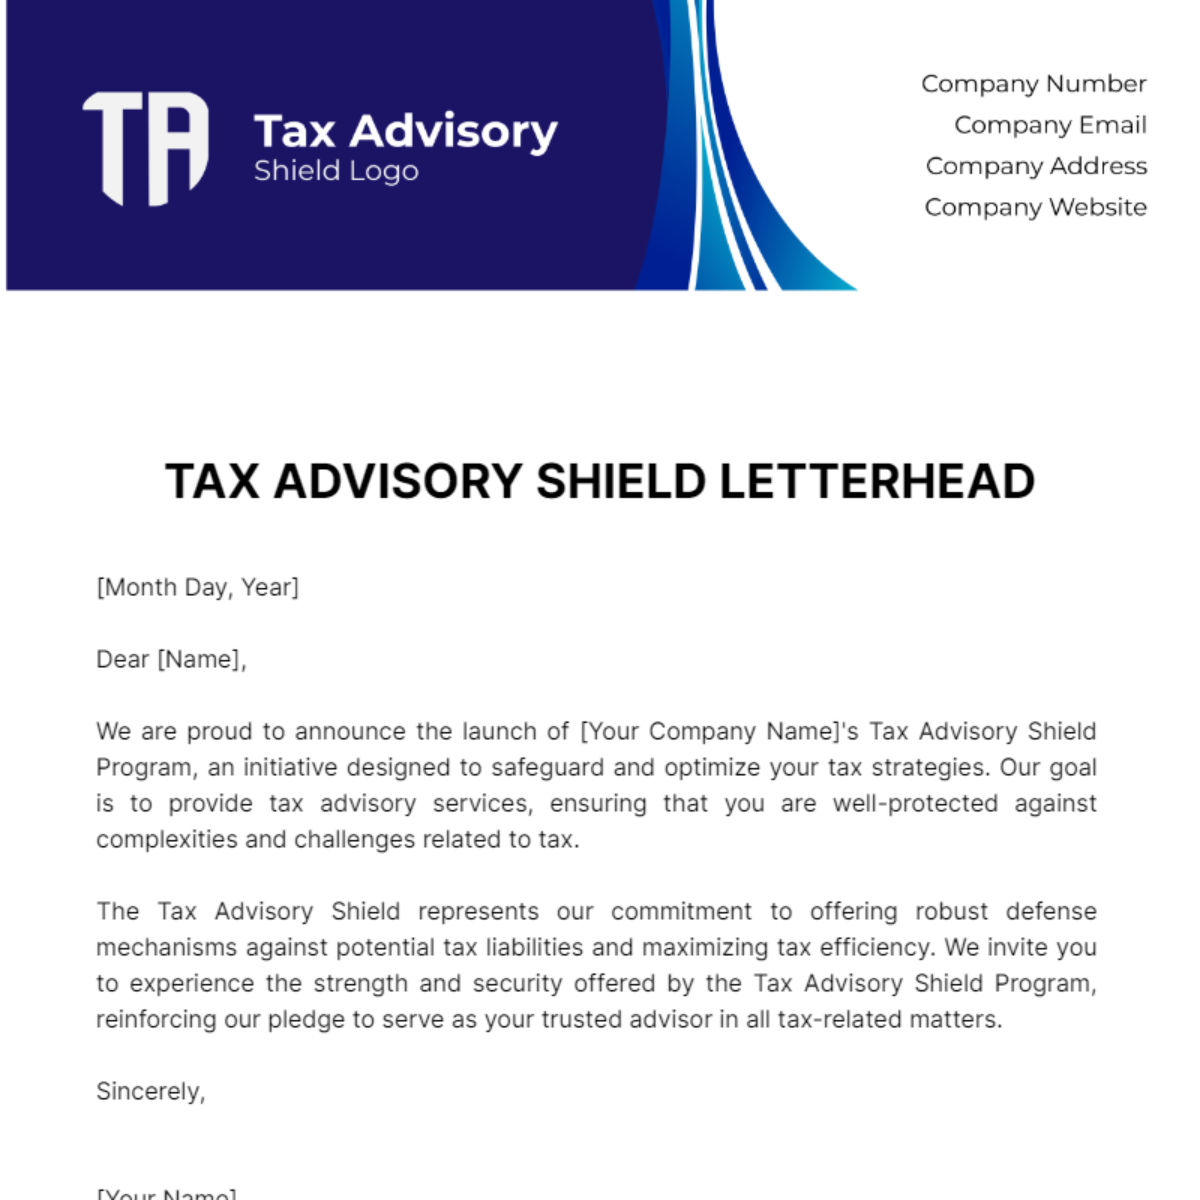 Tax Advisory Shield Letterhead Template